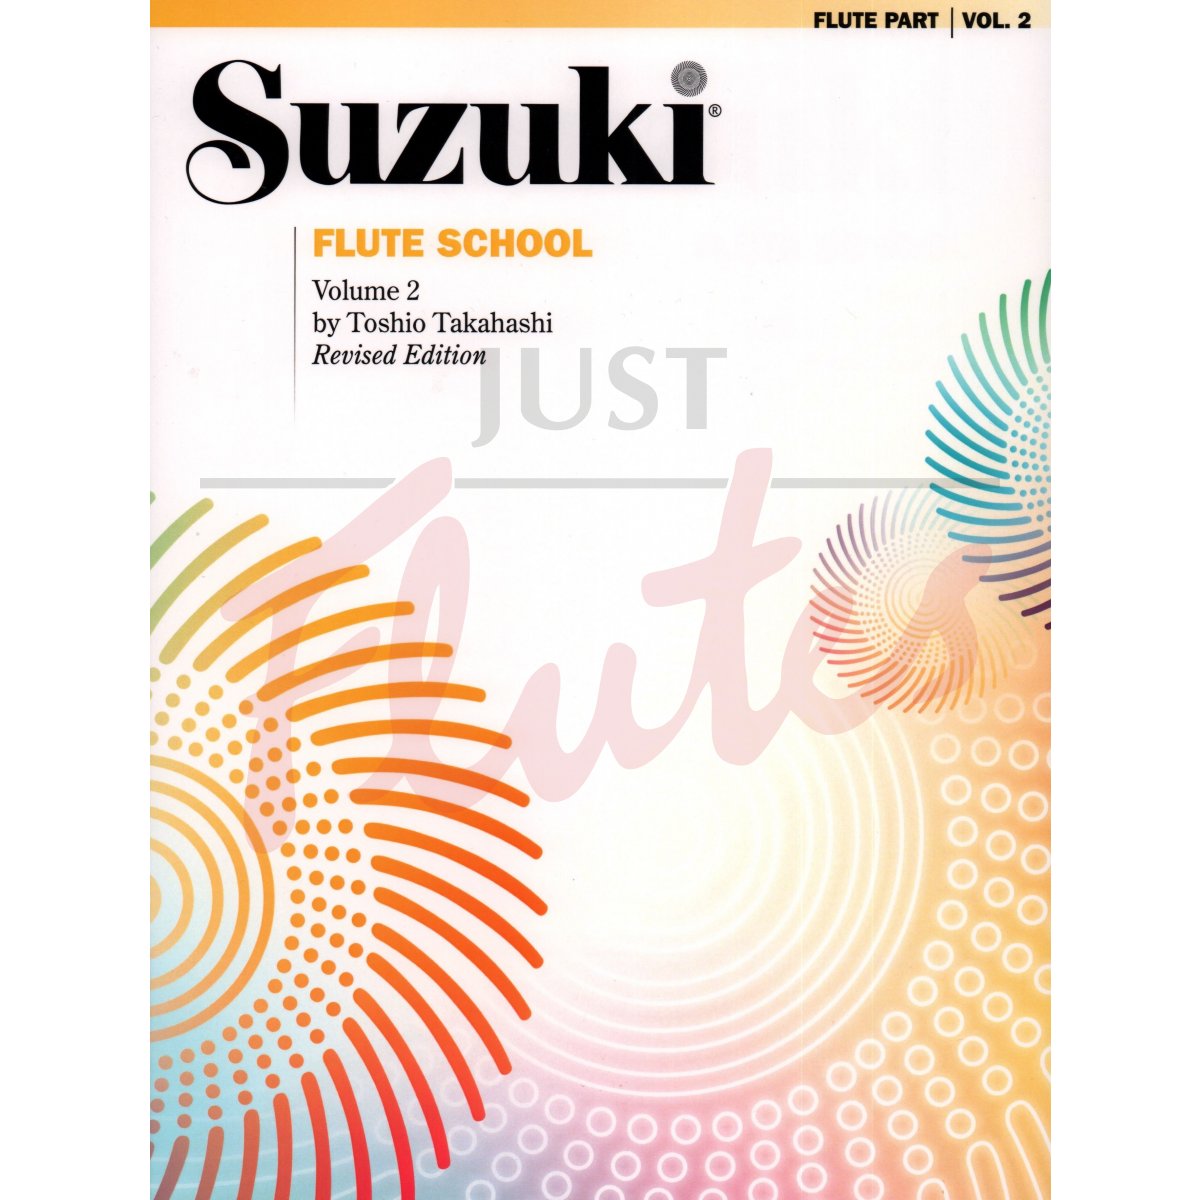 Suzuki Flute School Vol 2 (Revised Edition) [Flute Part]